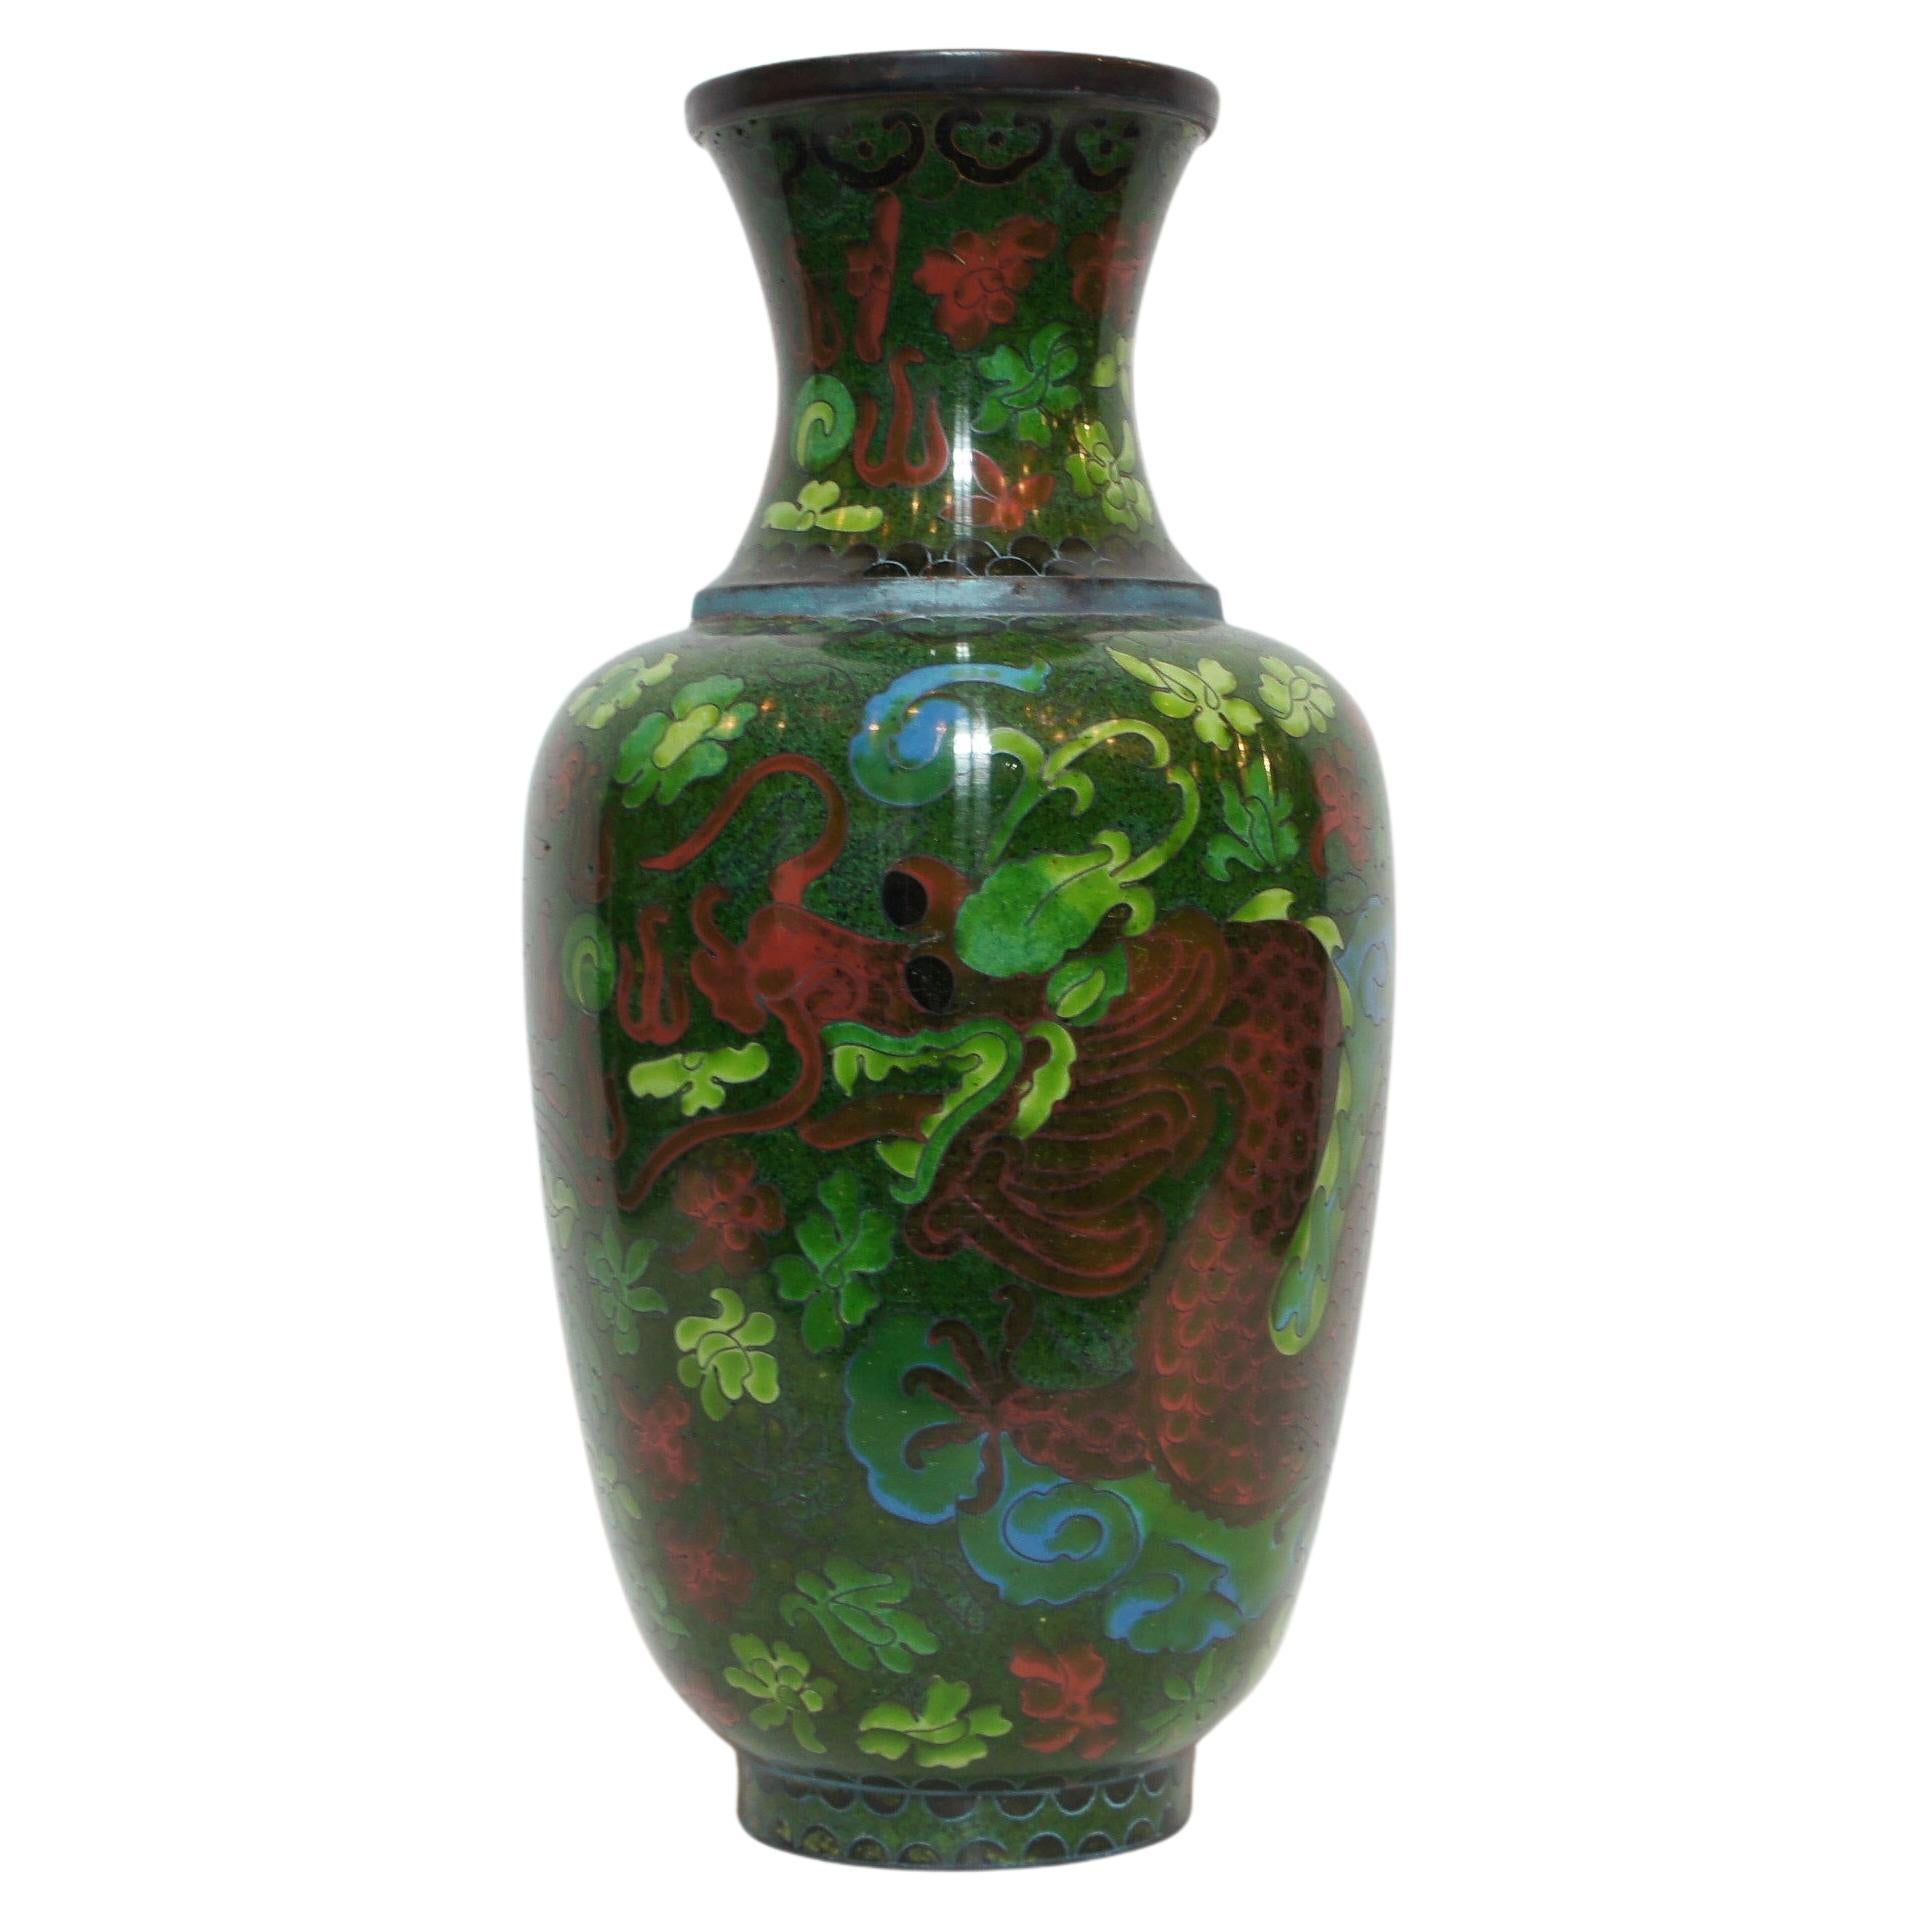 Antique Japanese Green Flower Vase with Copper in Edo Era, 1860s